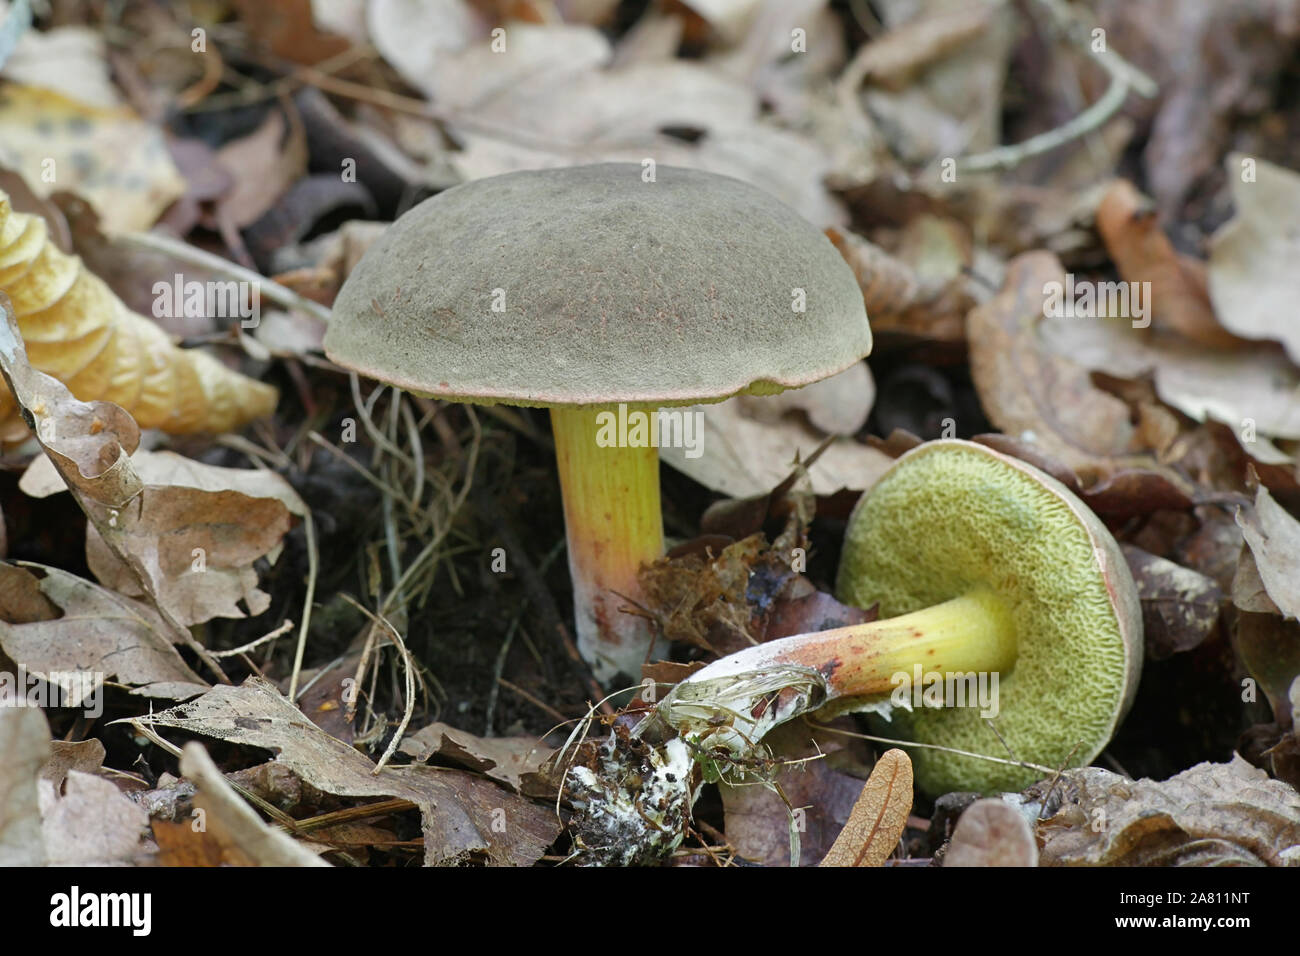 Xerocomellus pruinatus, known as matt bolete, wild mushroom from Finland Stock Photo